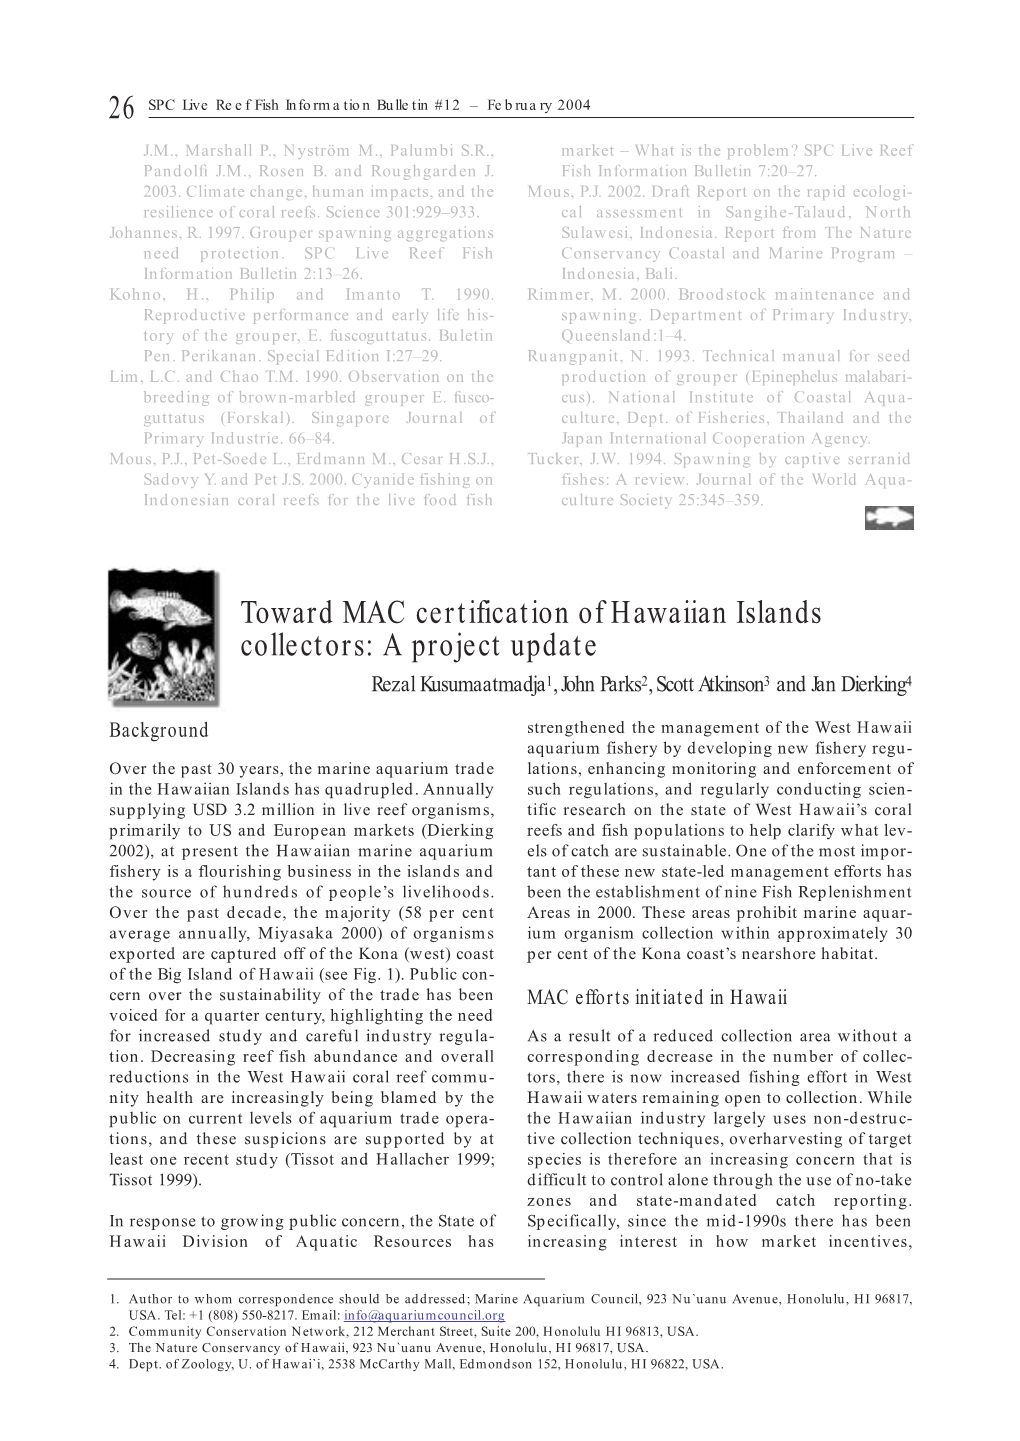 Toward MAC Certification of Hawaiian Islands Collectors: a Project Update